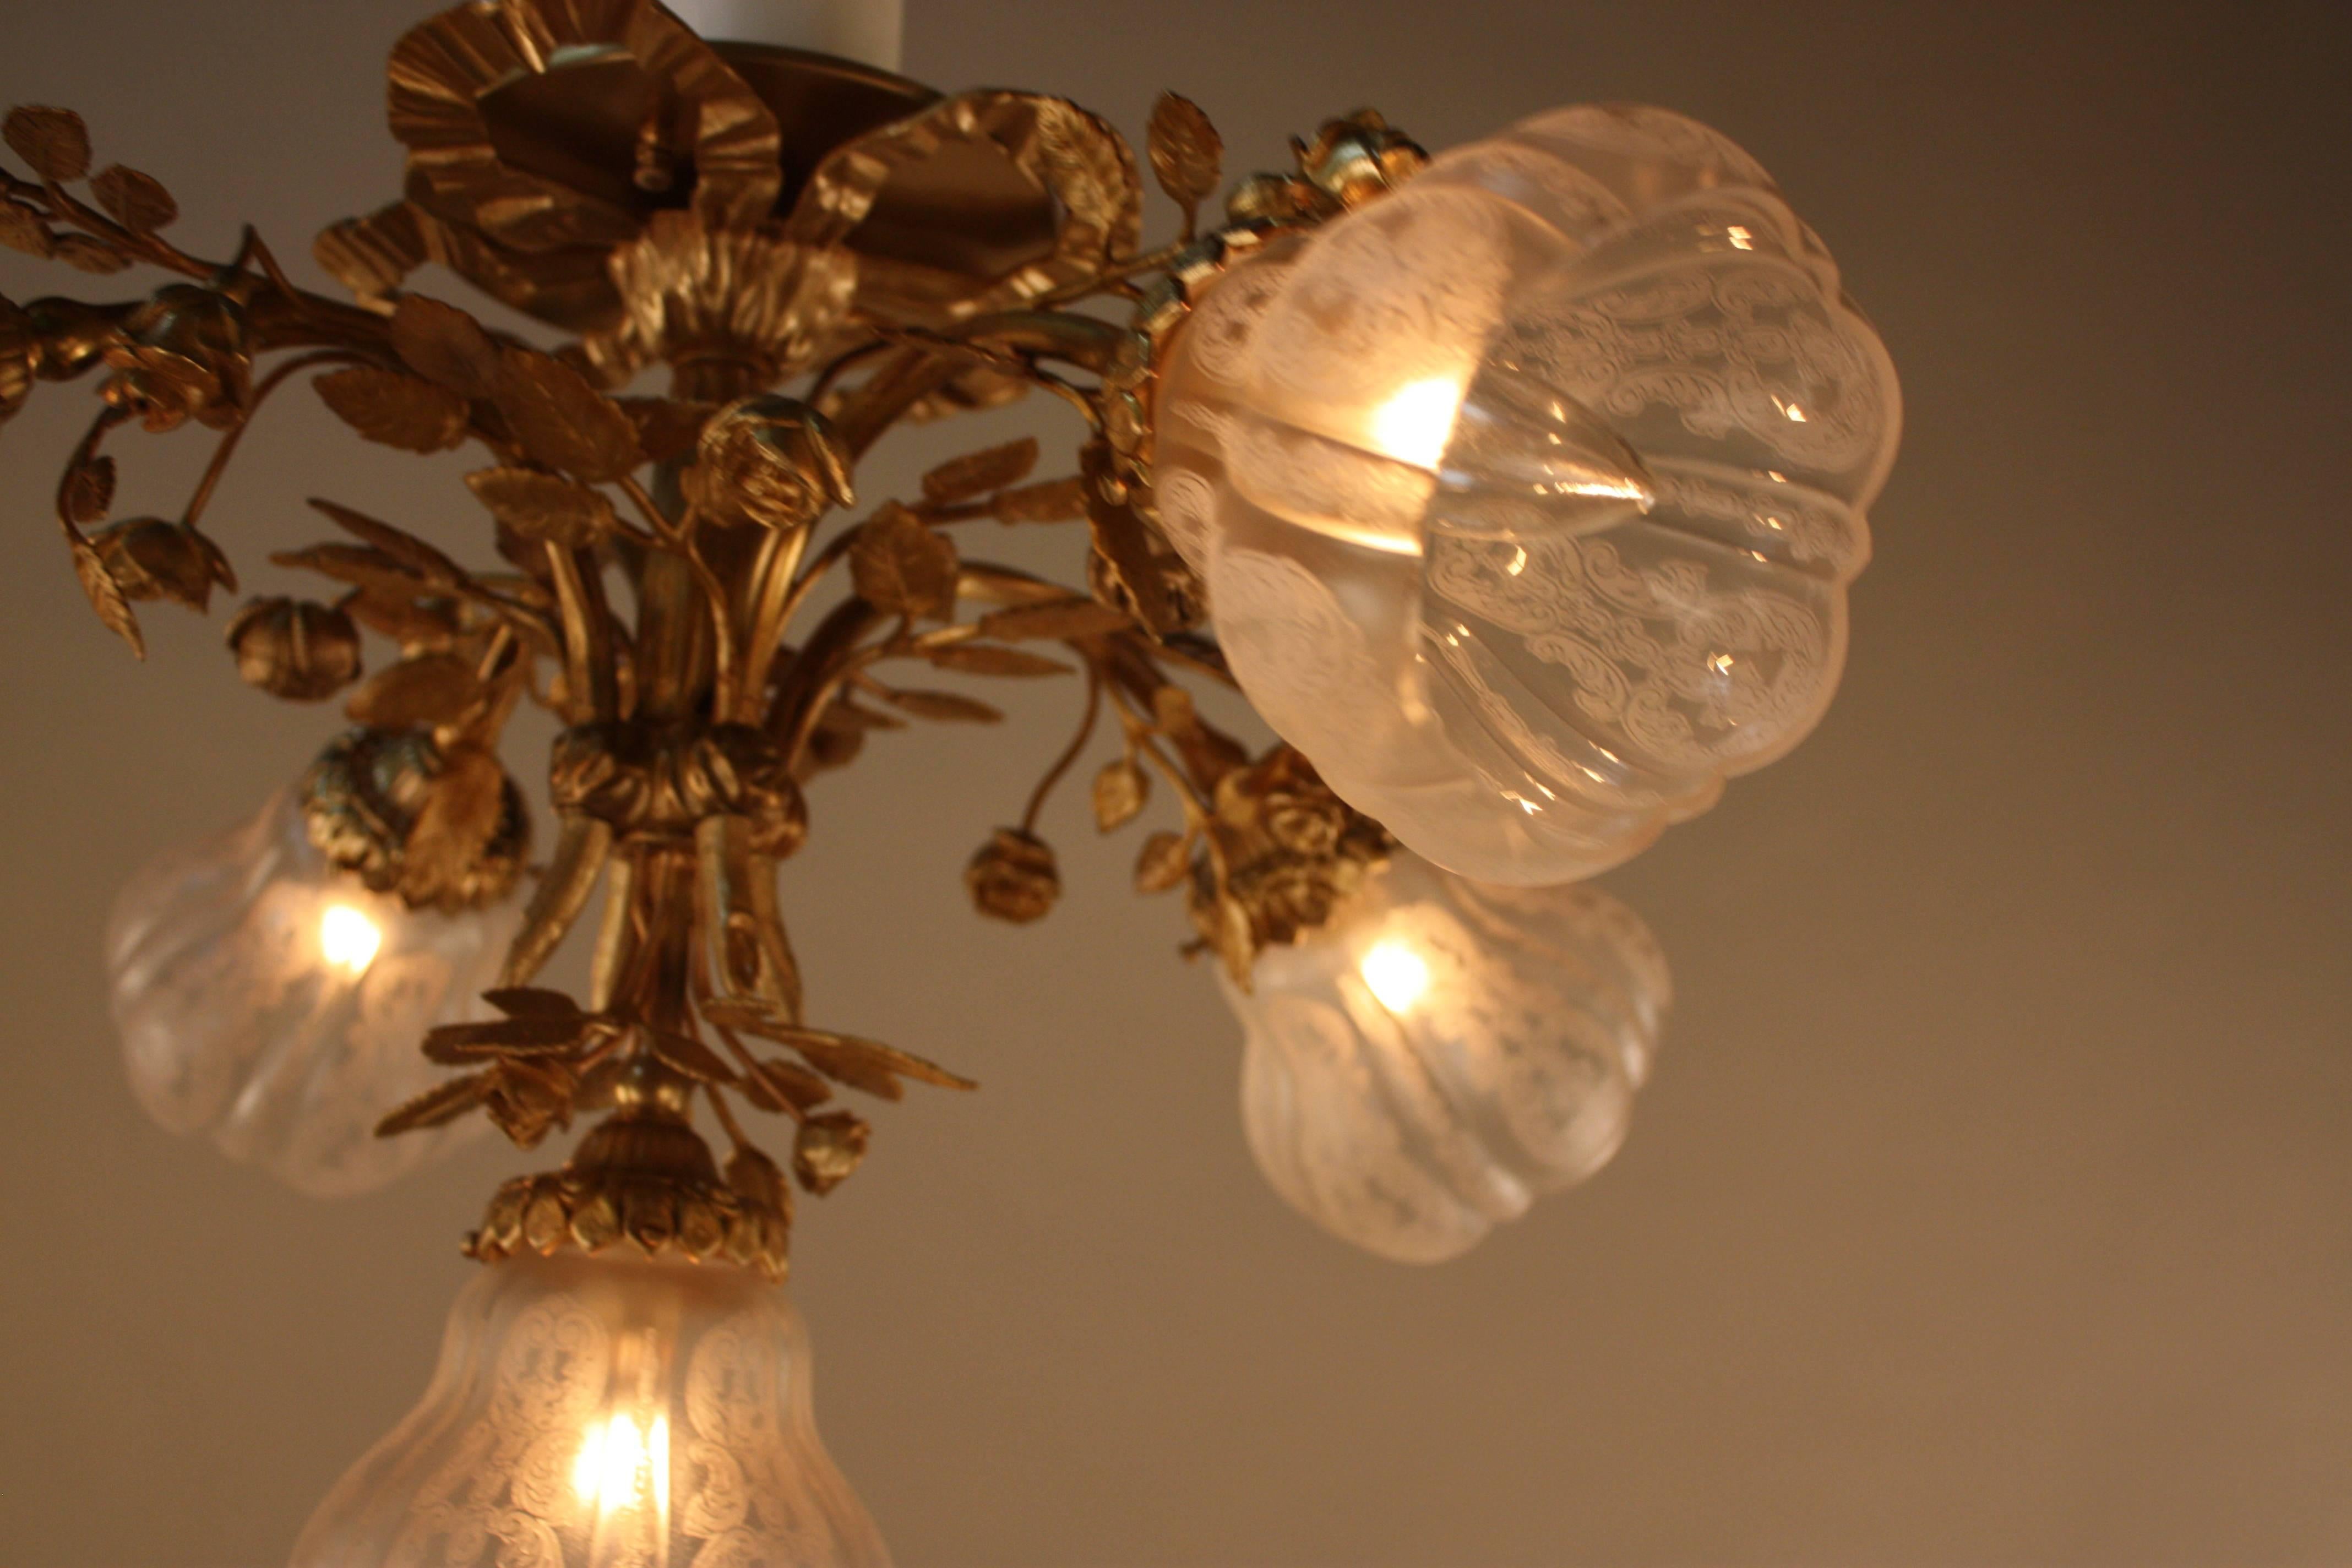 Flora design bronze flush mount chandelier with acid etched glass shades.